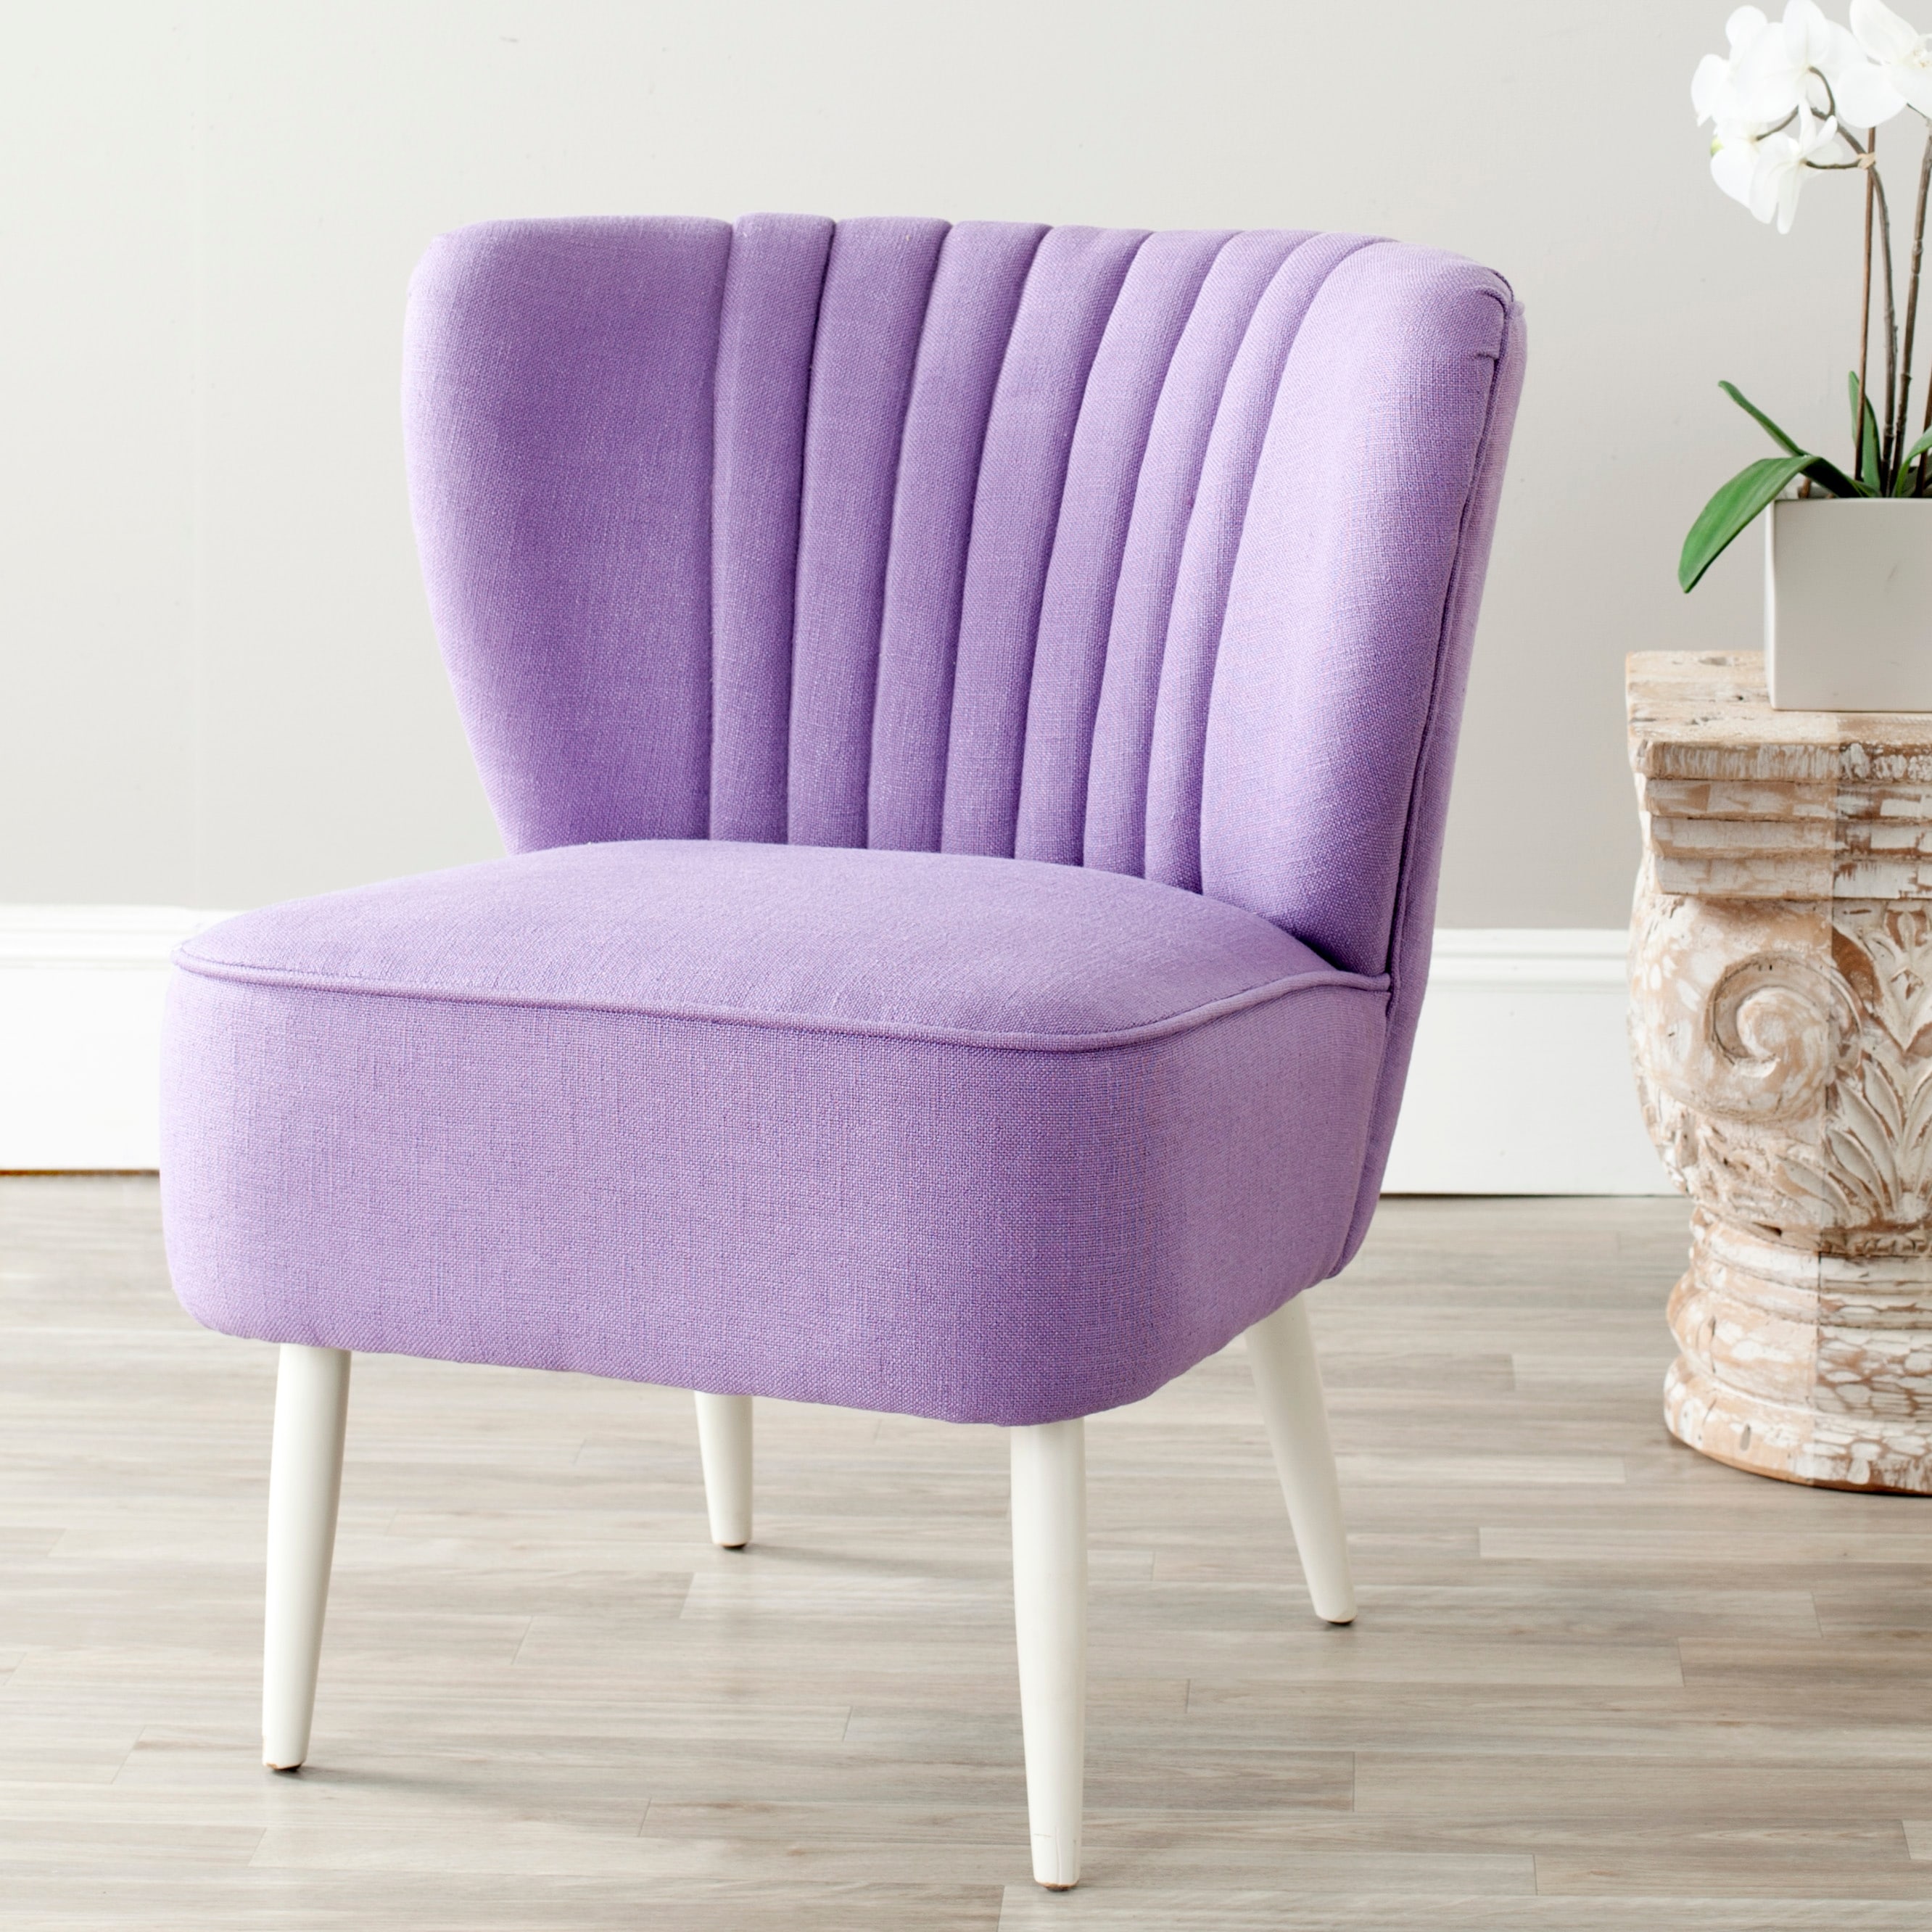 Safavieh Mid Century Purple Accent Chair 244 X 283 X 299 On Sale Overstock 6387522